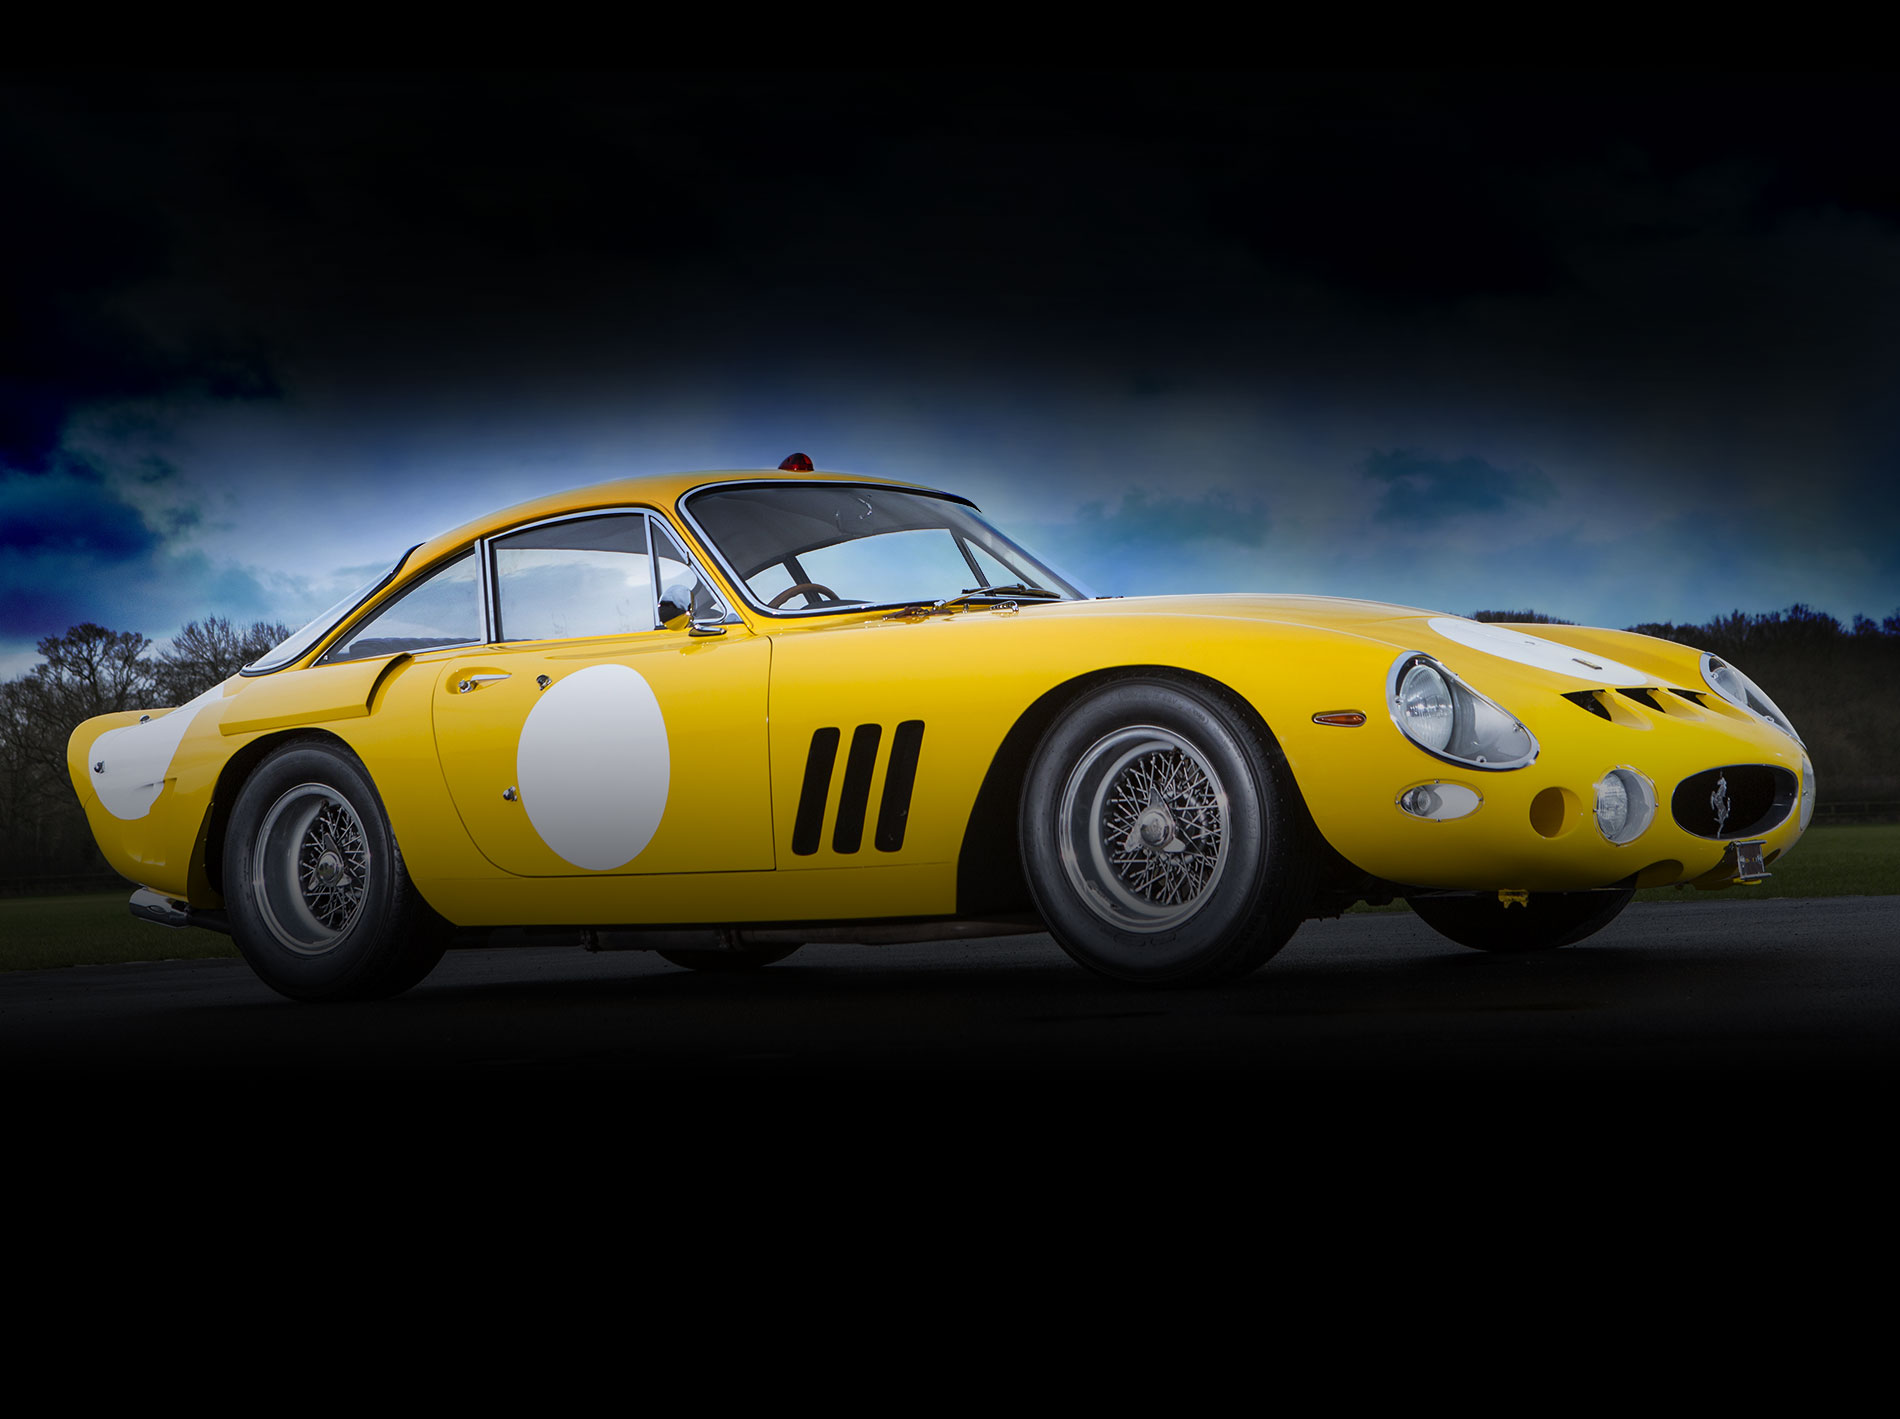 Talacrest have sold over 1700 classic Ferrari